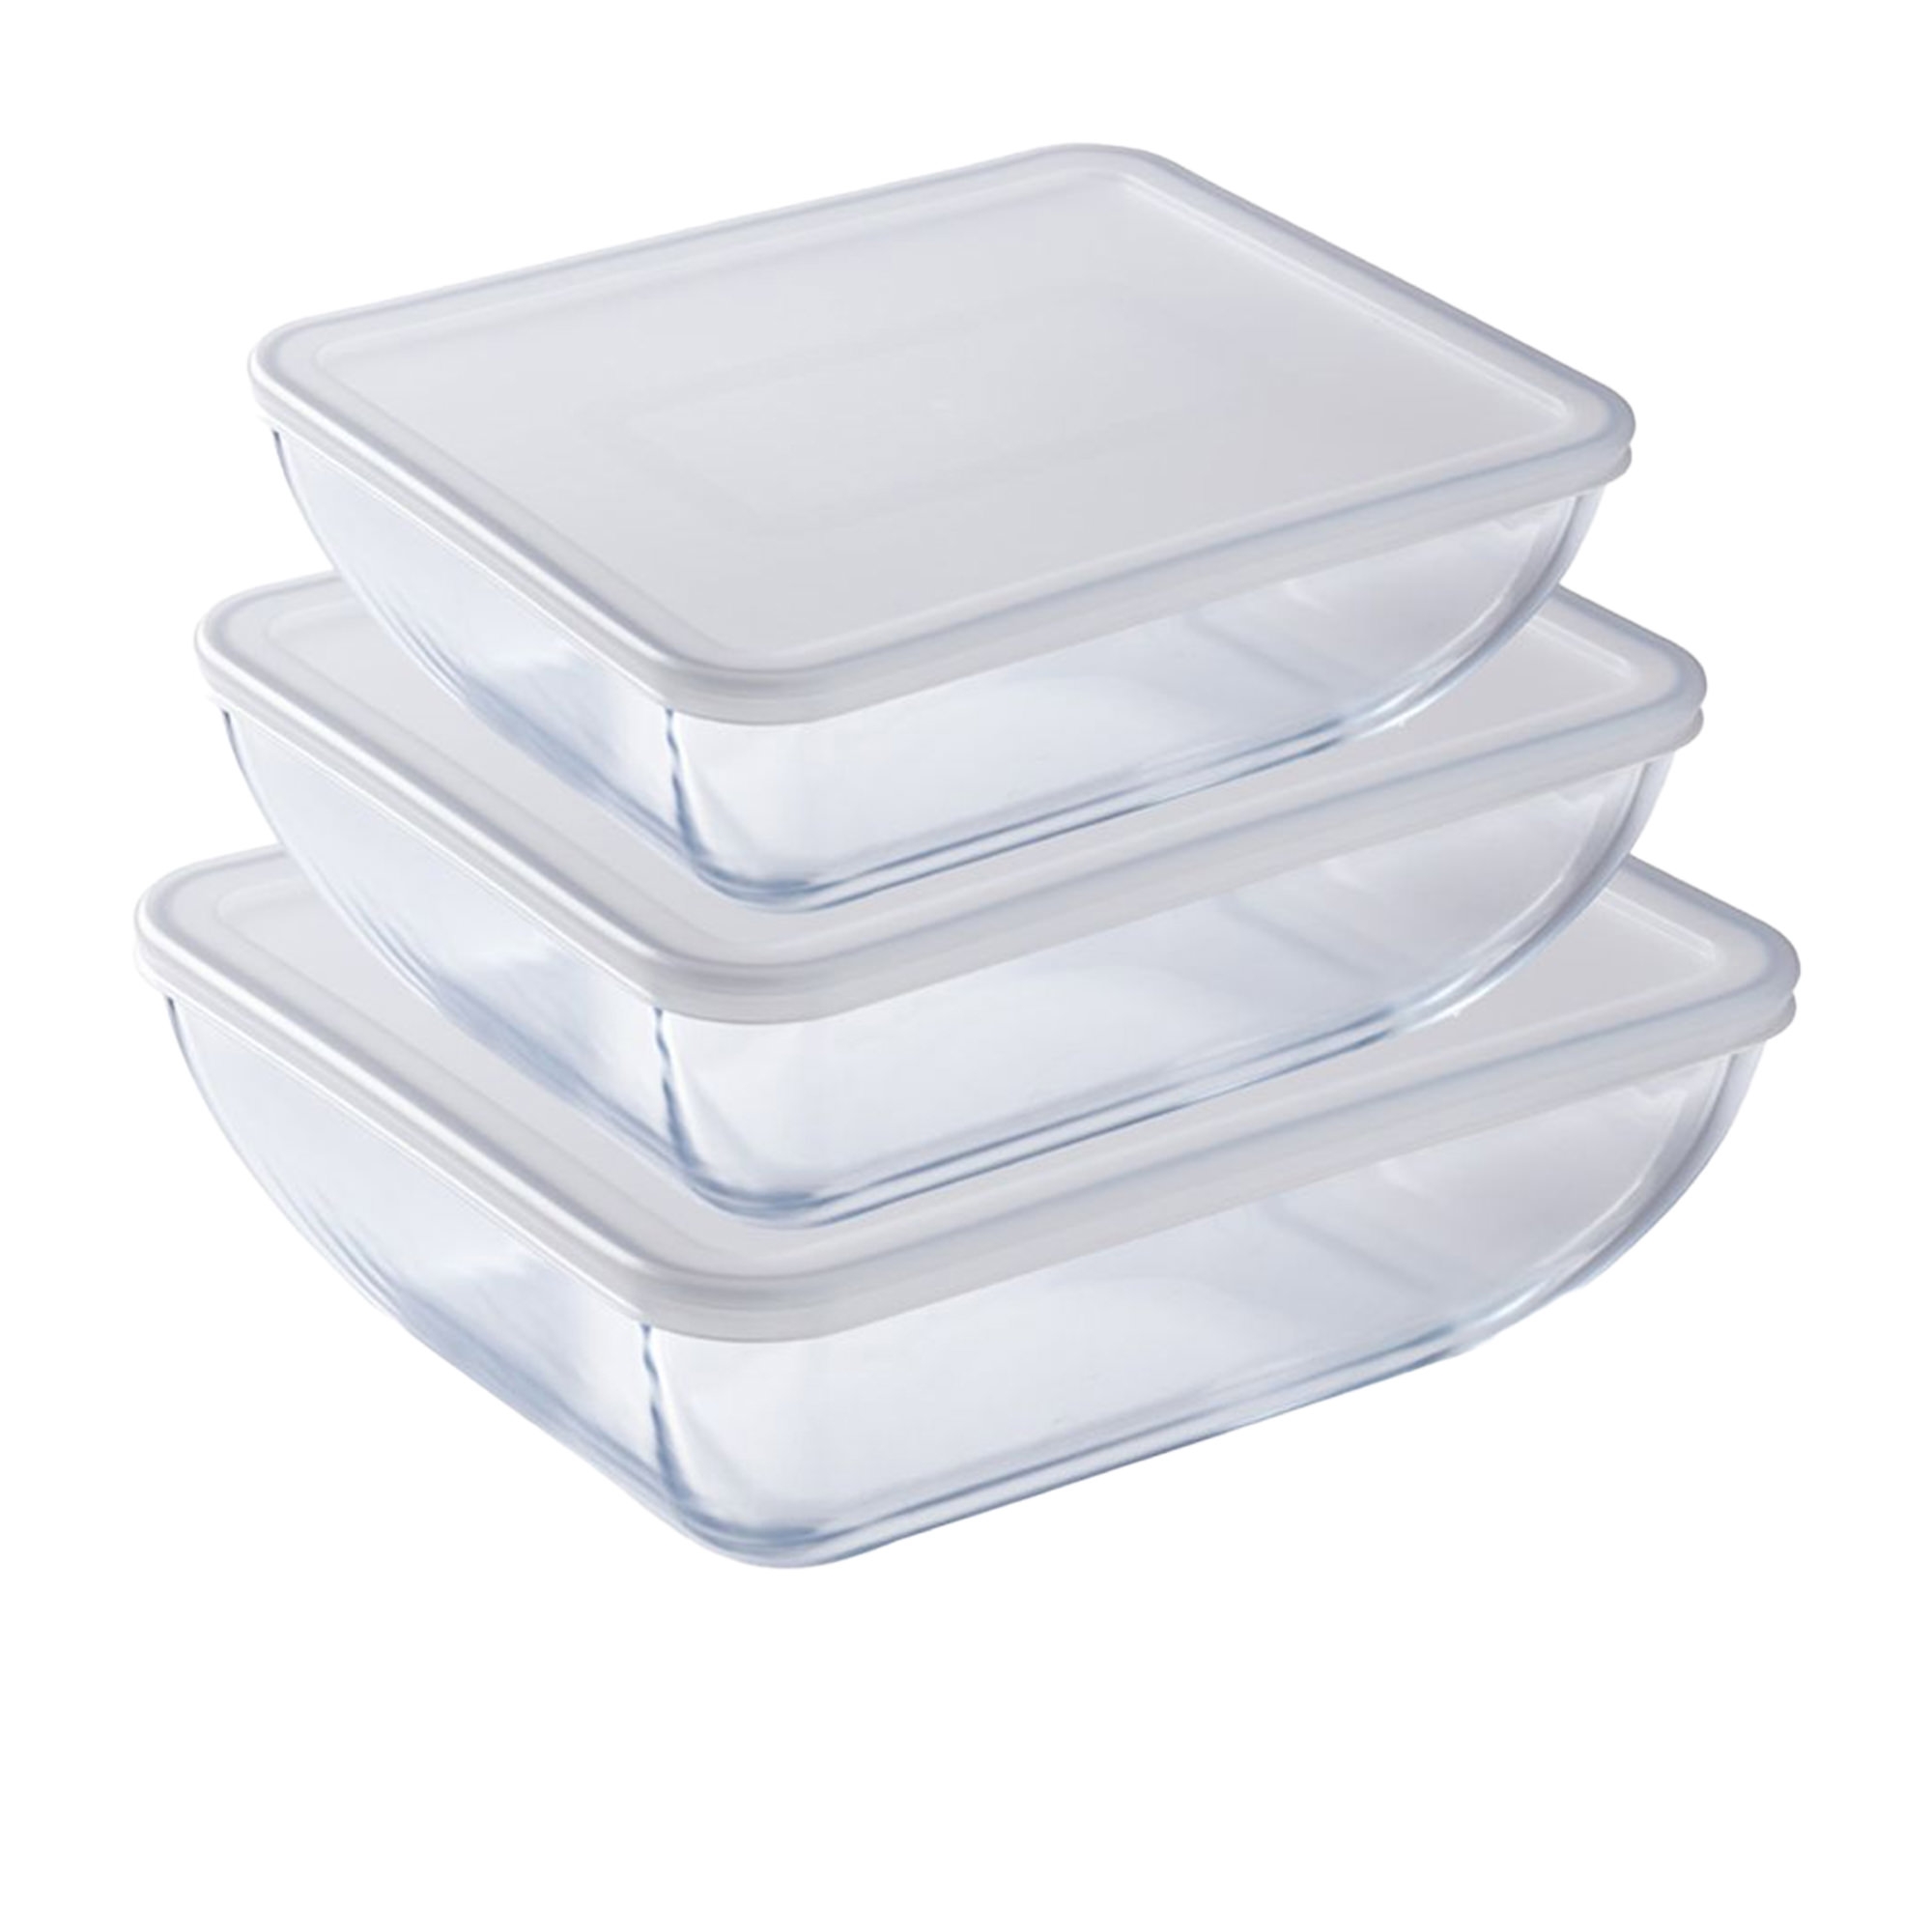 O' Cuisine Rectangular Glass Food Storage Container Set 6pc Image 1